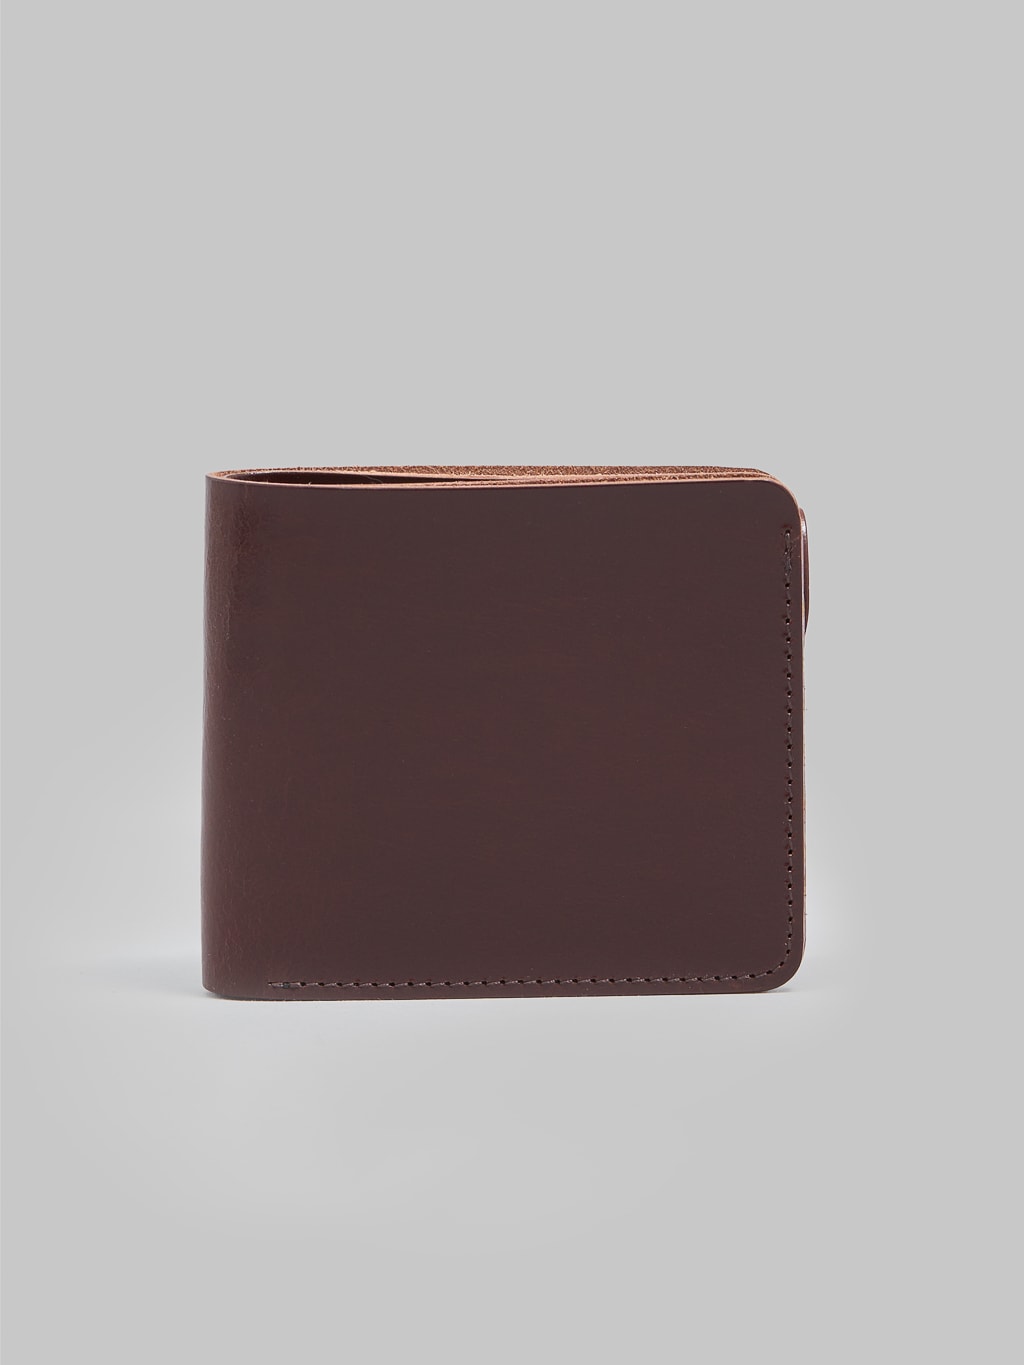 kobashi studio leather fold wallet brown